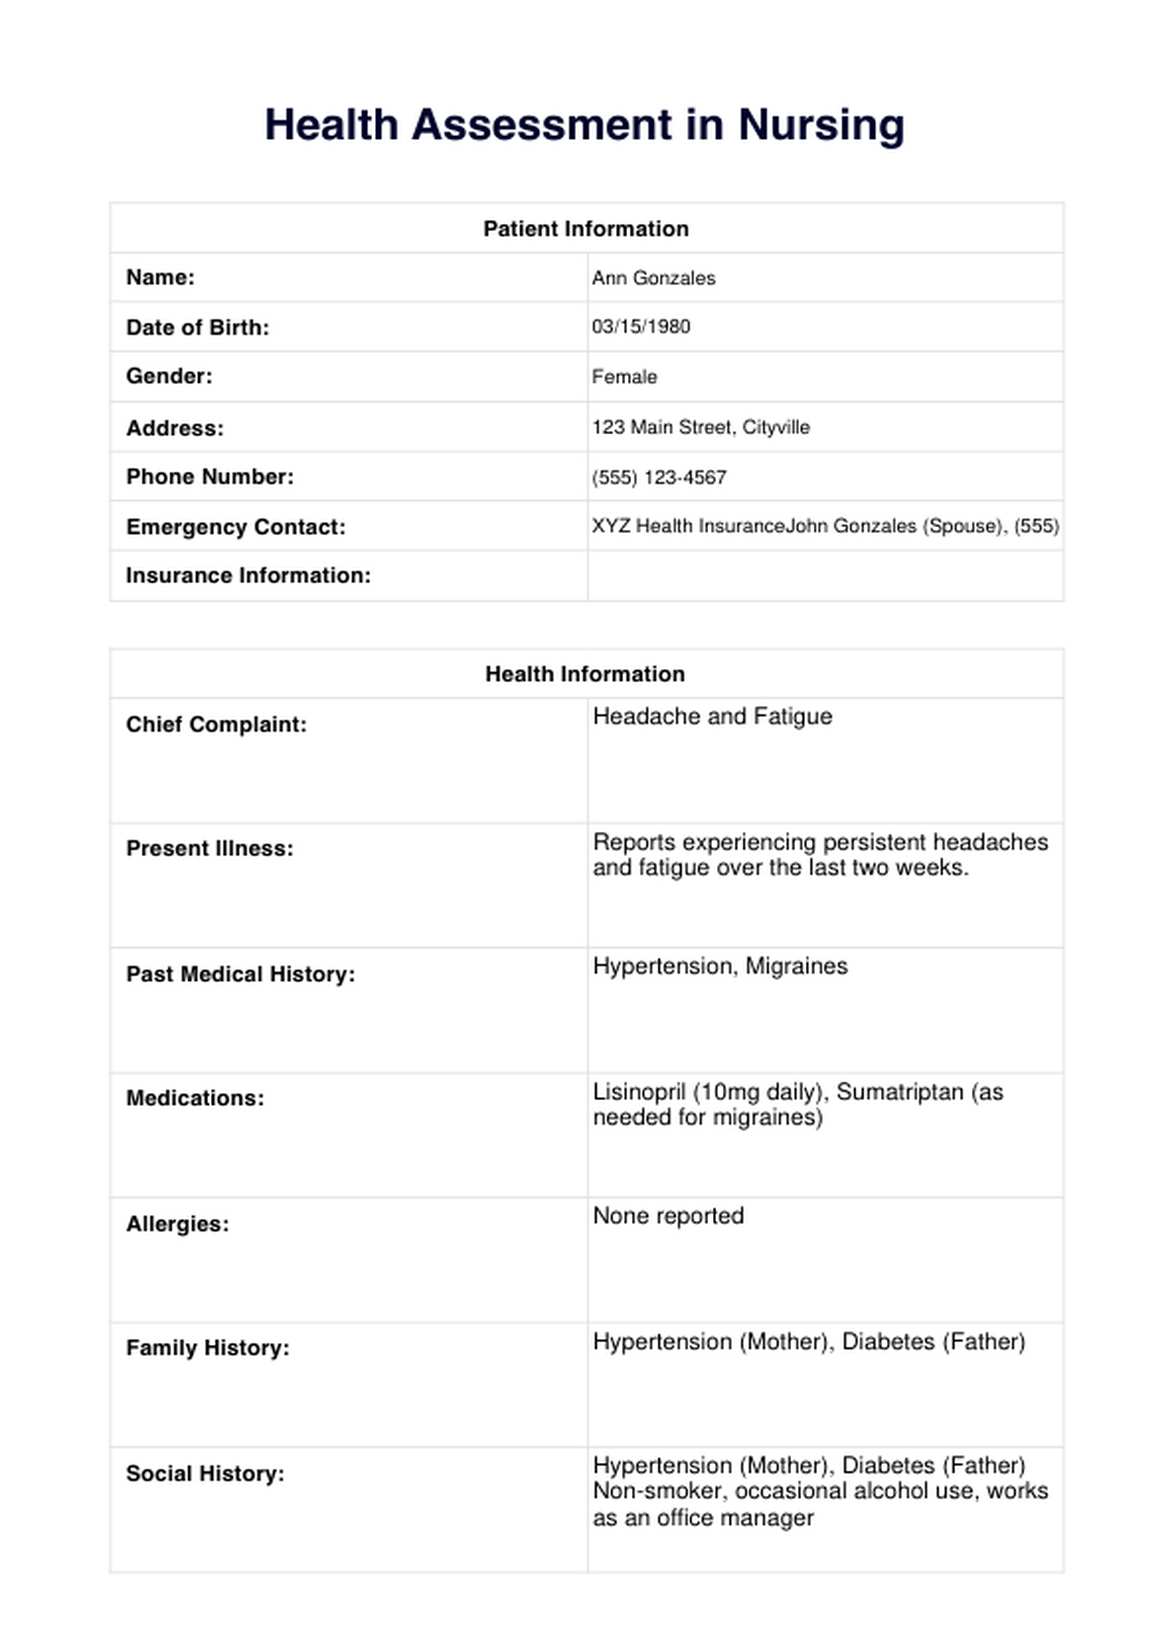 Health Assessment in Nursing PDF Example